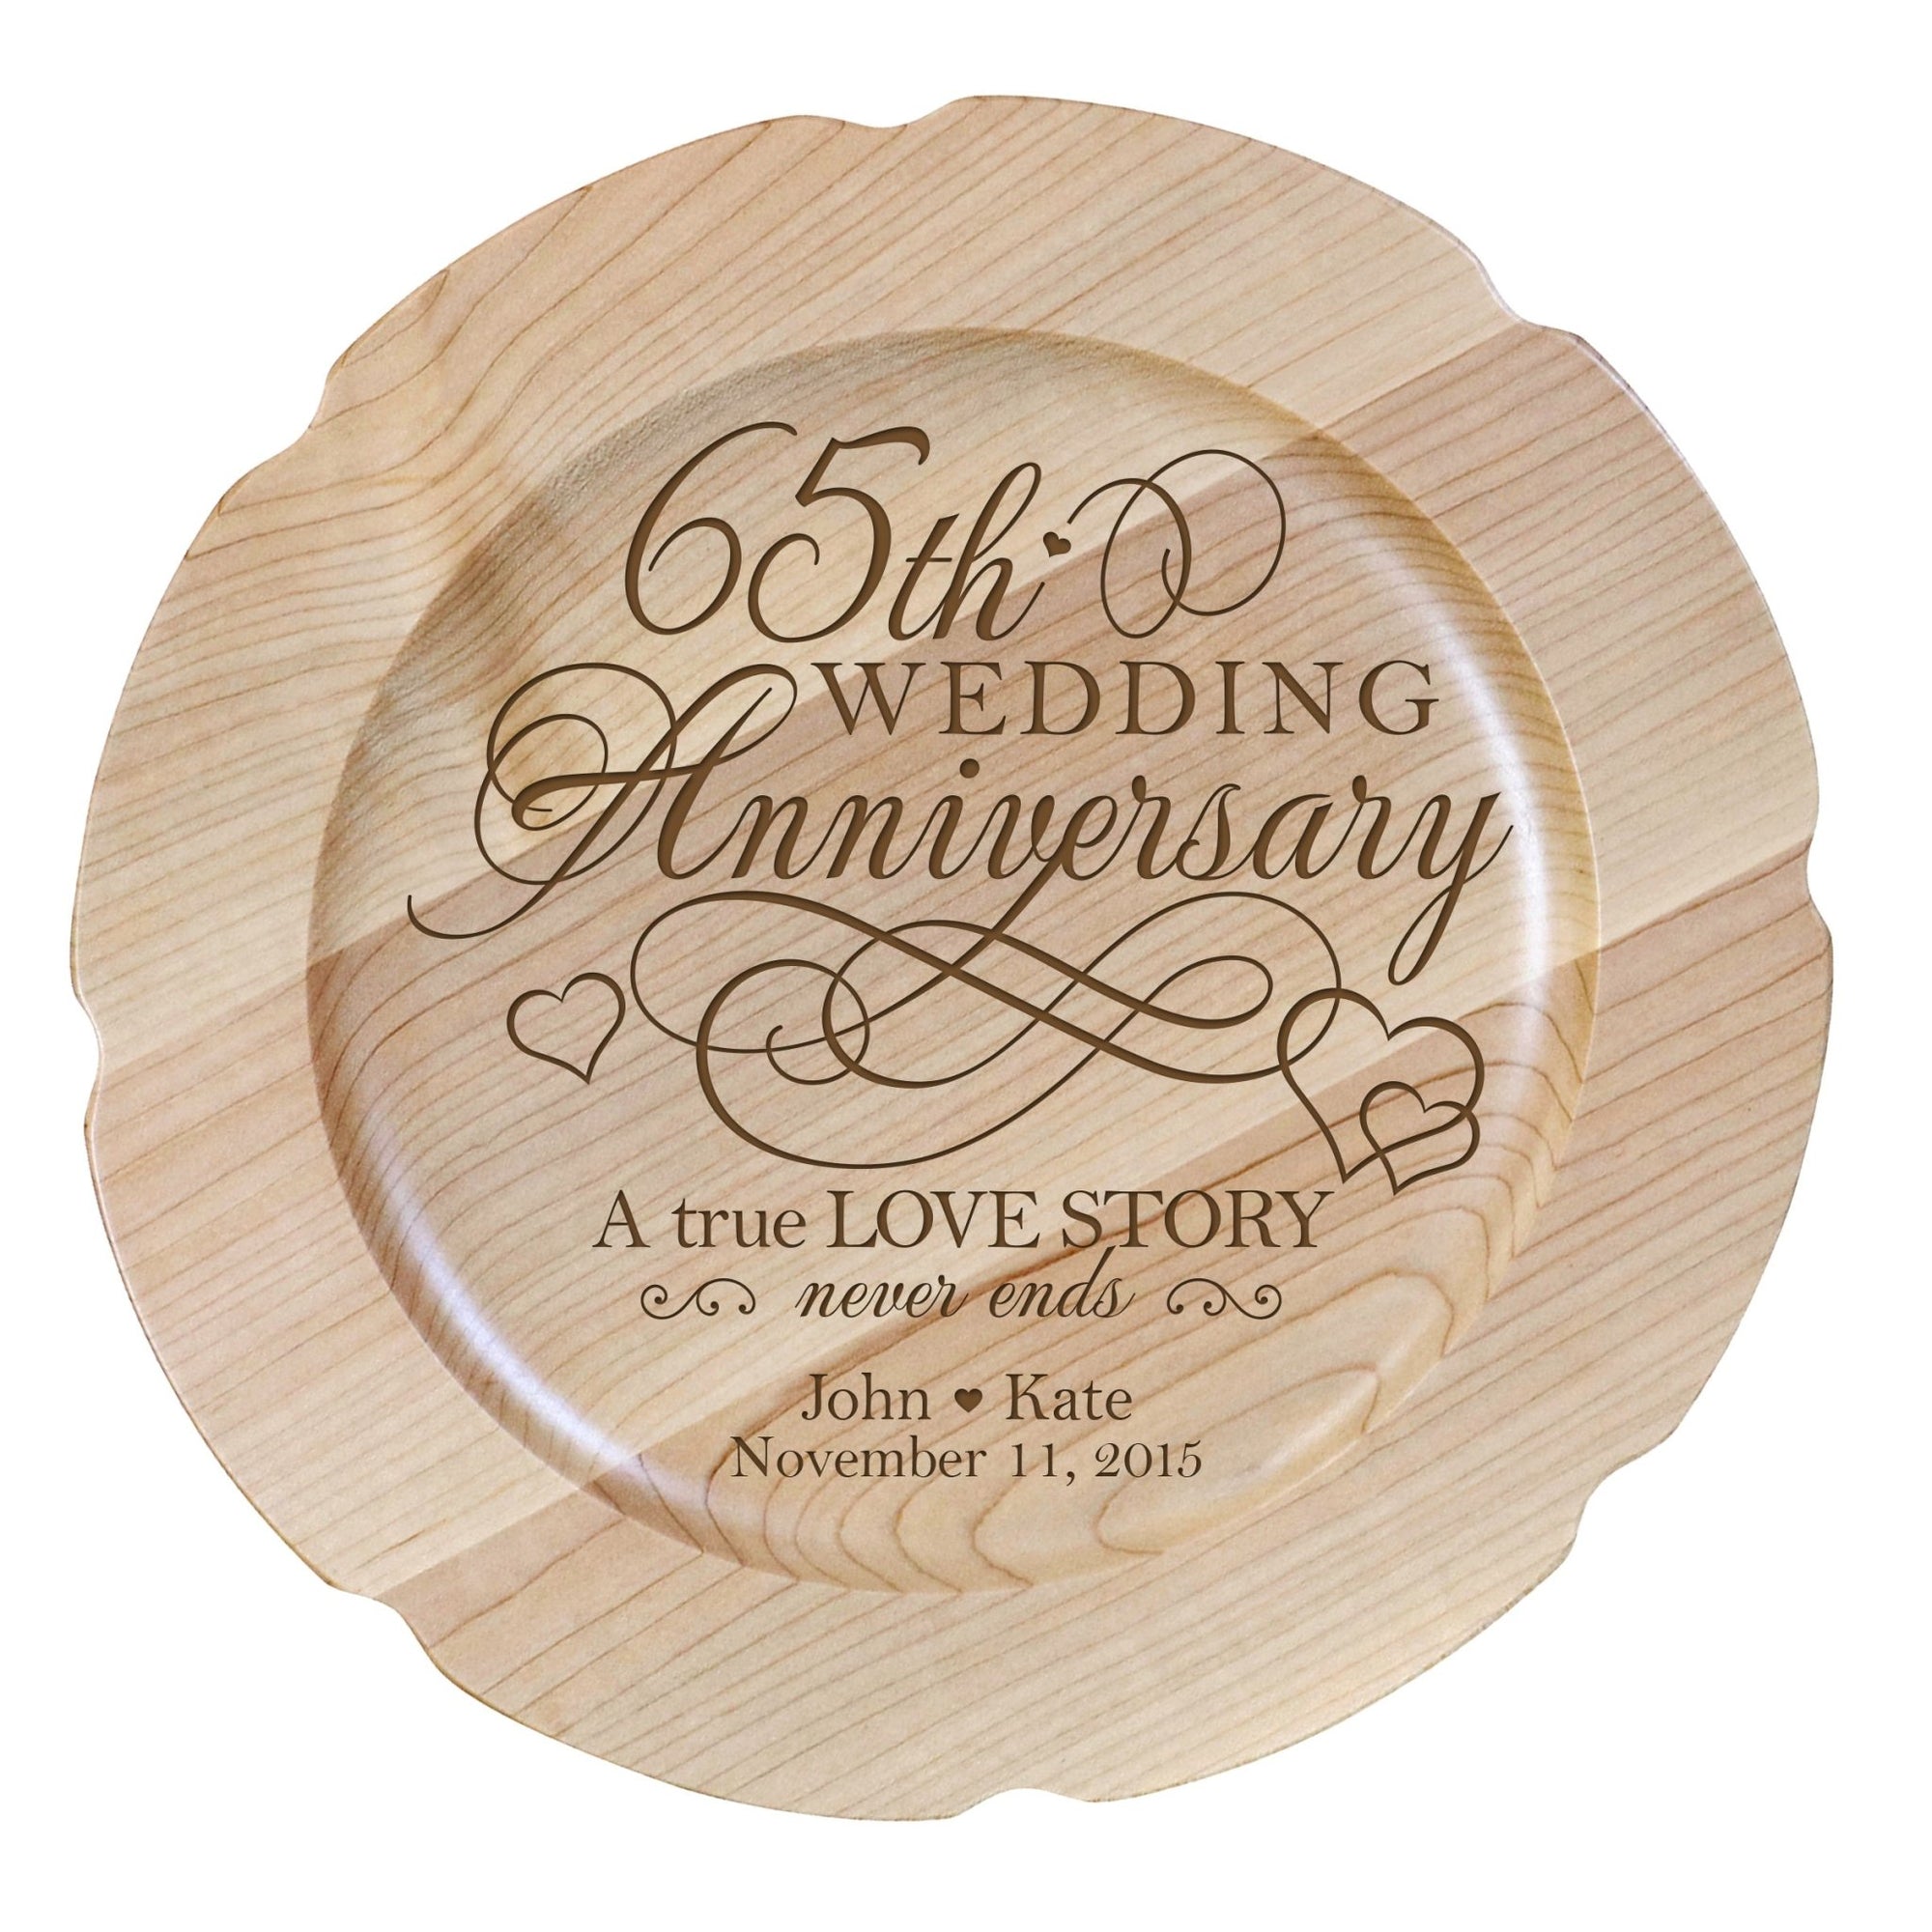 Personalized 65th Wedding Anniversary Decorative Plate - Celebrating - LifeSong Milestones